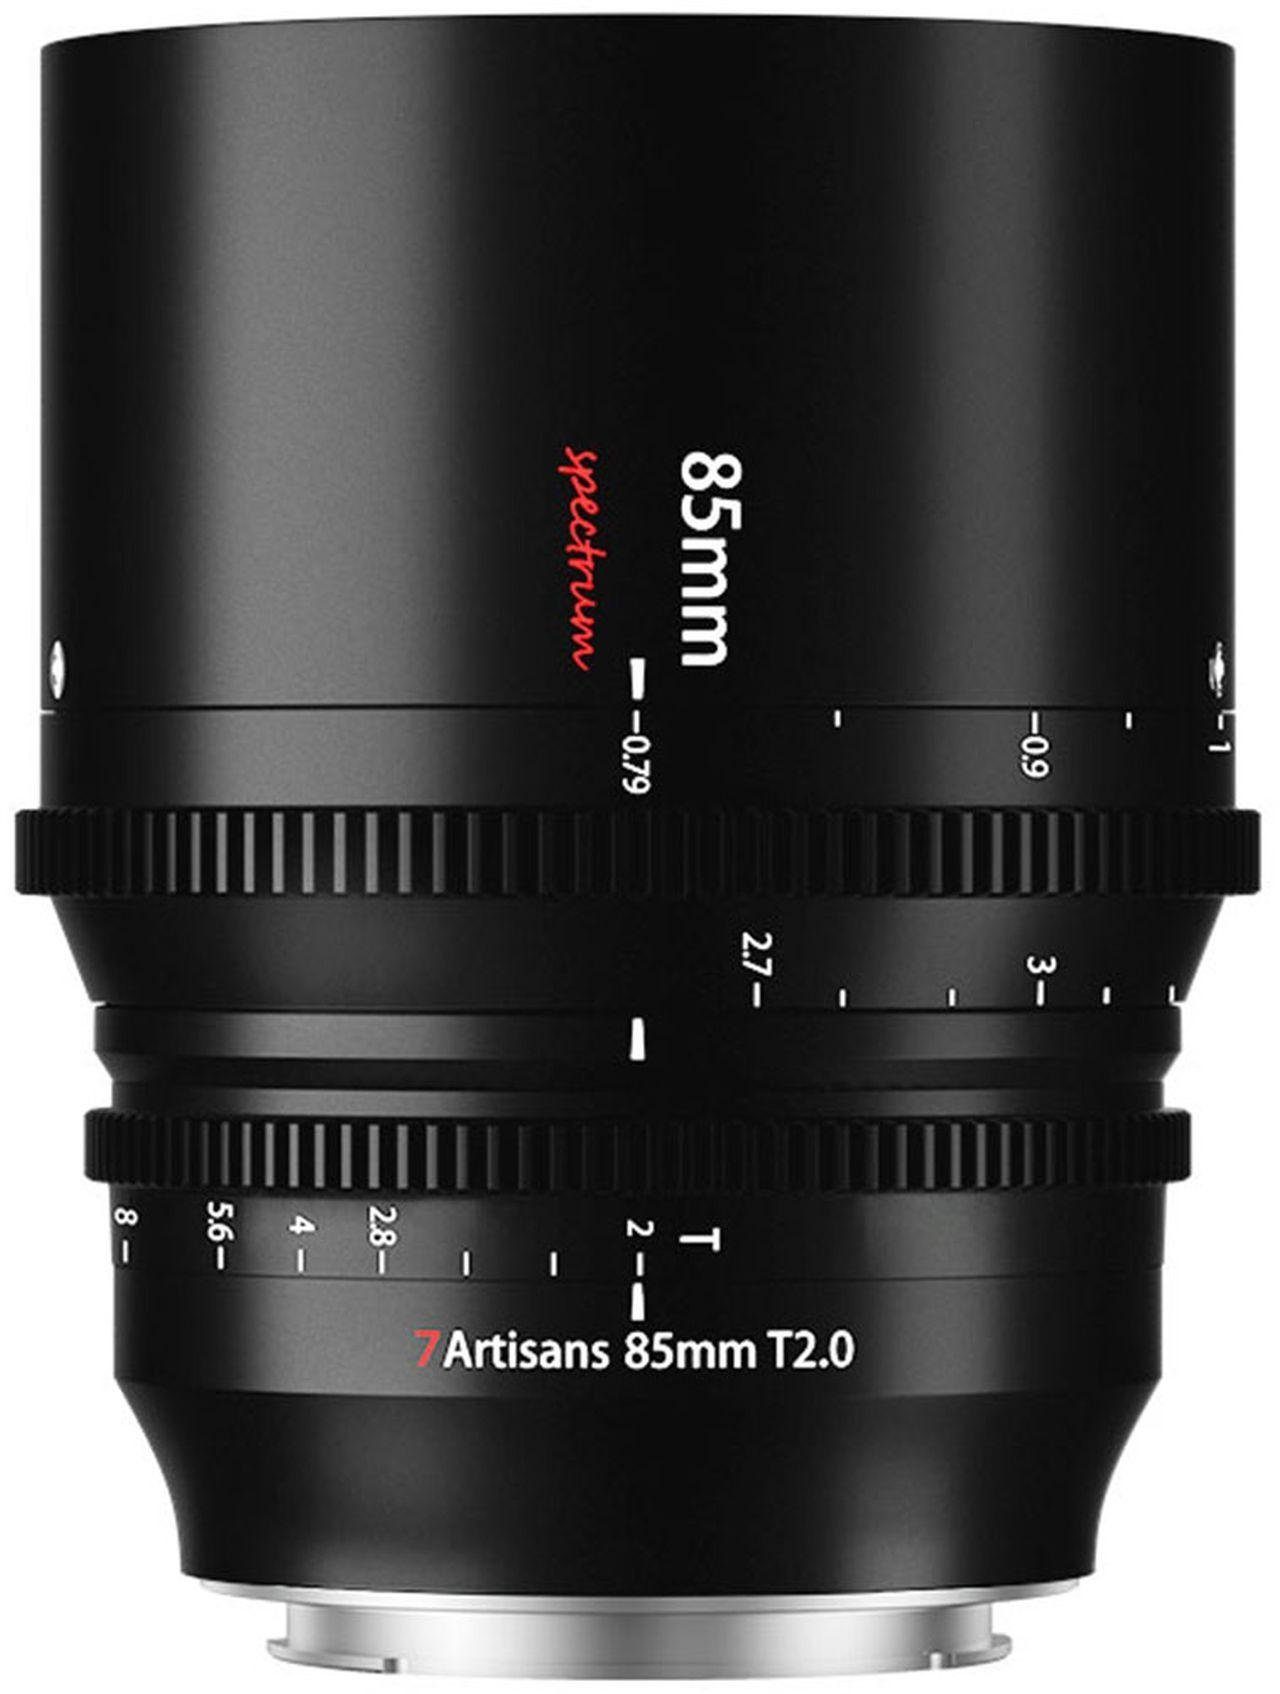 Nikon Zoomobjektiv 7Artisans 85mm Spectrum Z T2.0